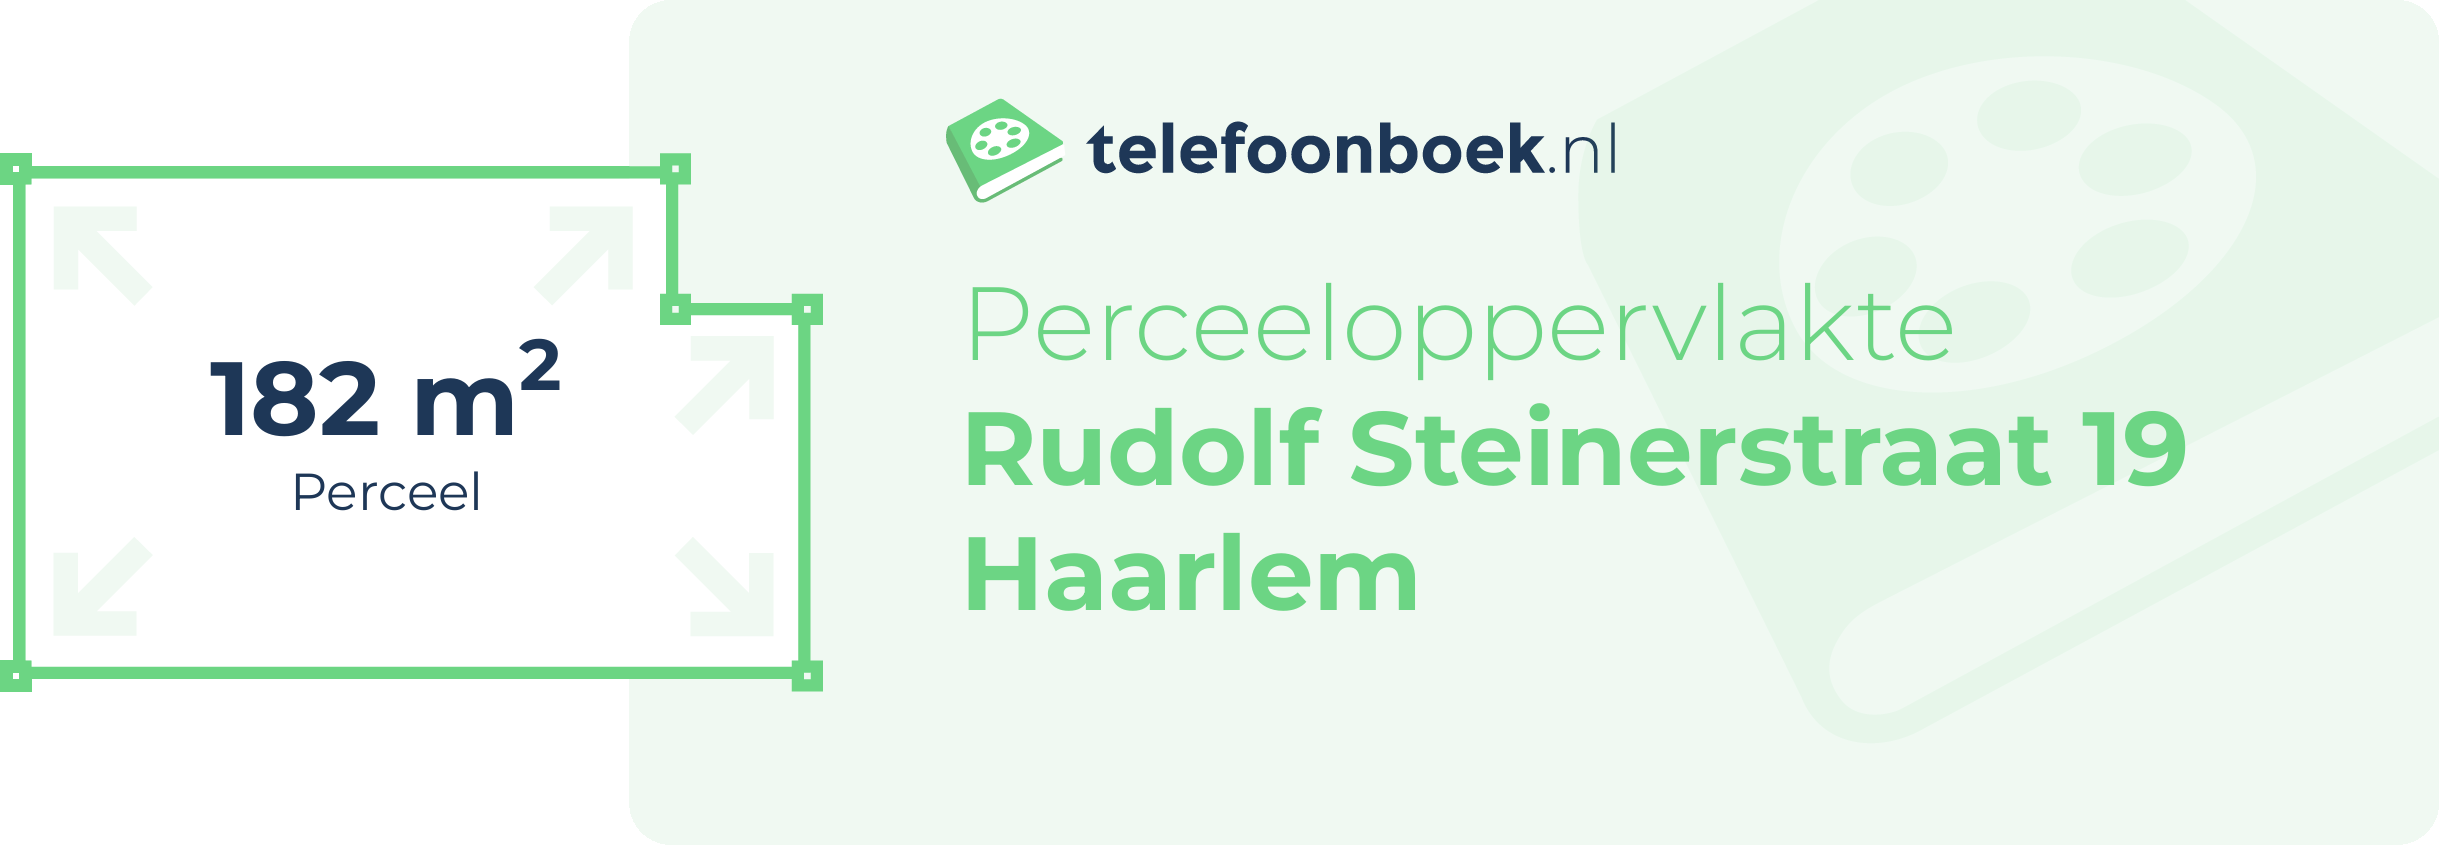 Perceeloppervlakte Rudolf Steinerstraat 19 Haarlem